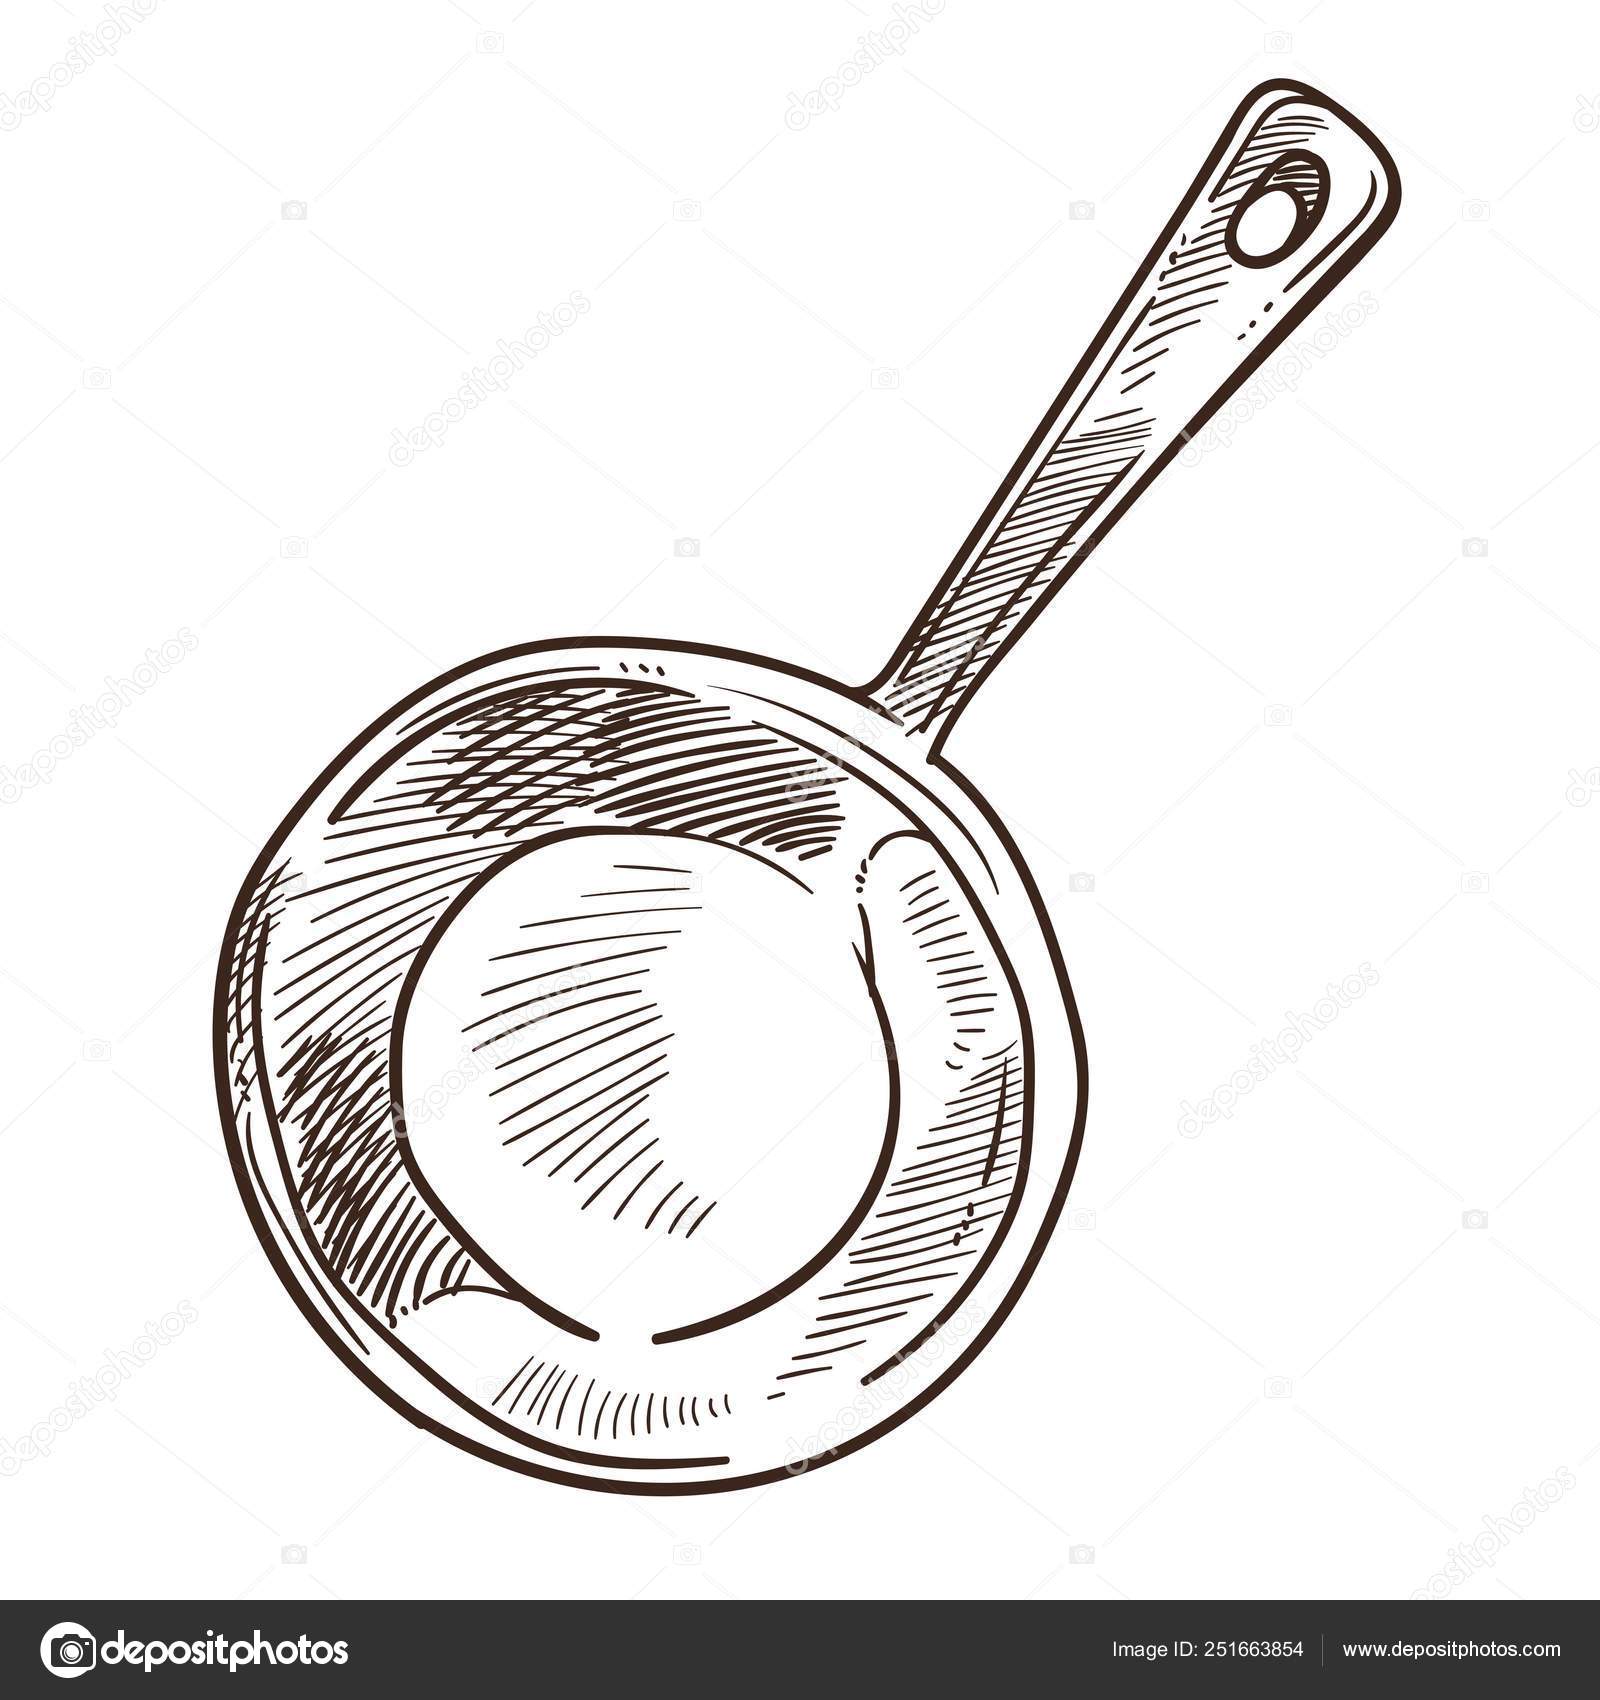 https://st4.depositphotos.com/1028367/25166/v/1600/depositphotos_251663854-stock-illustration-frying-pan-with-handle-for.jpg